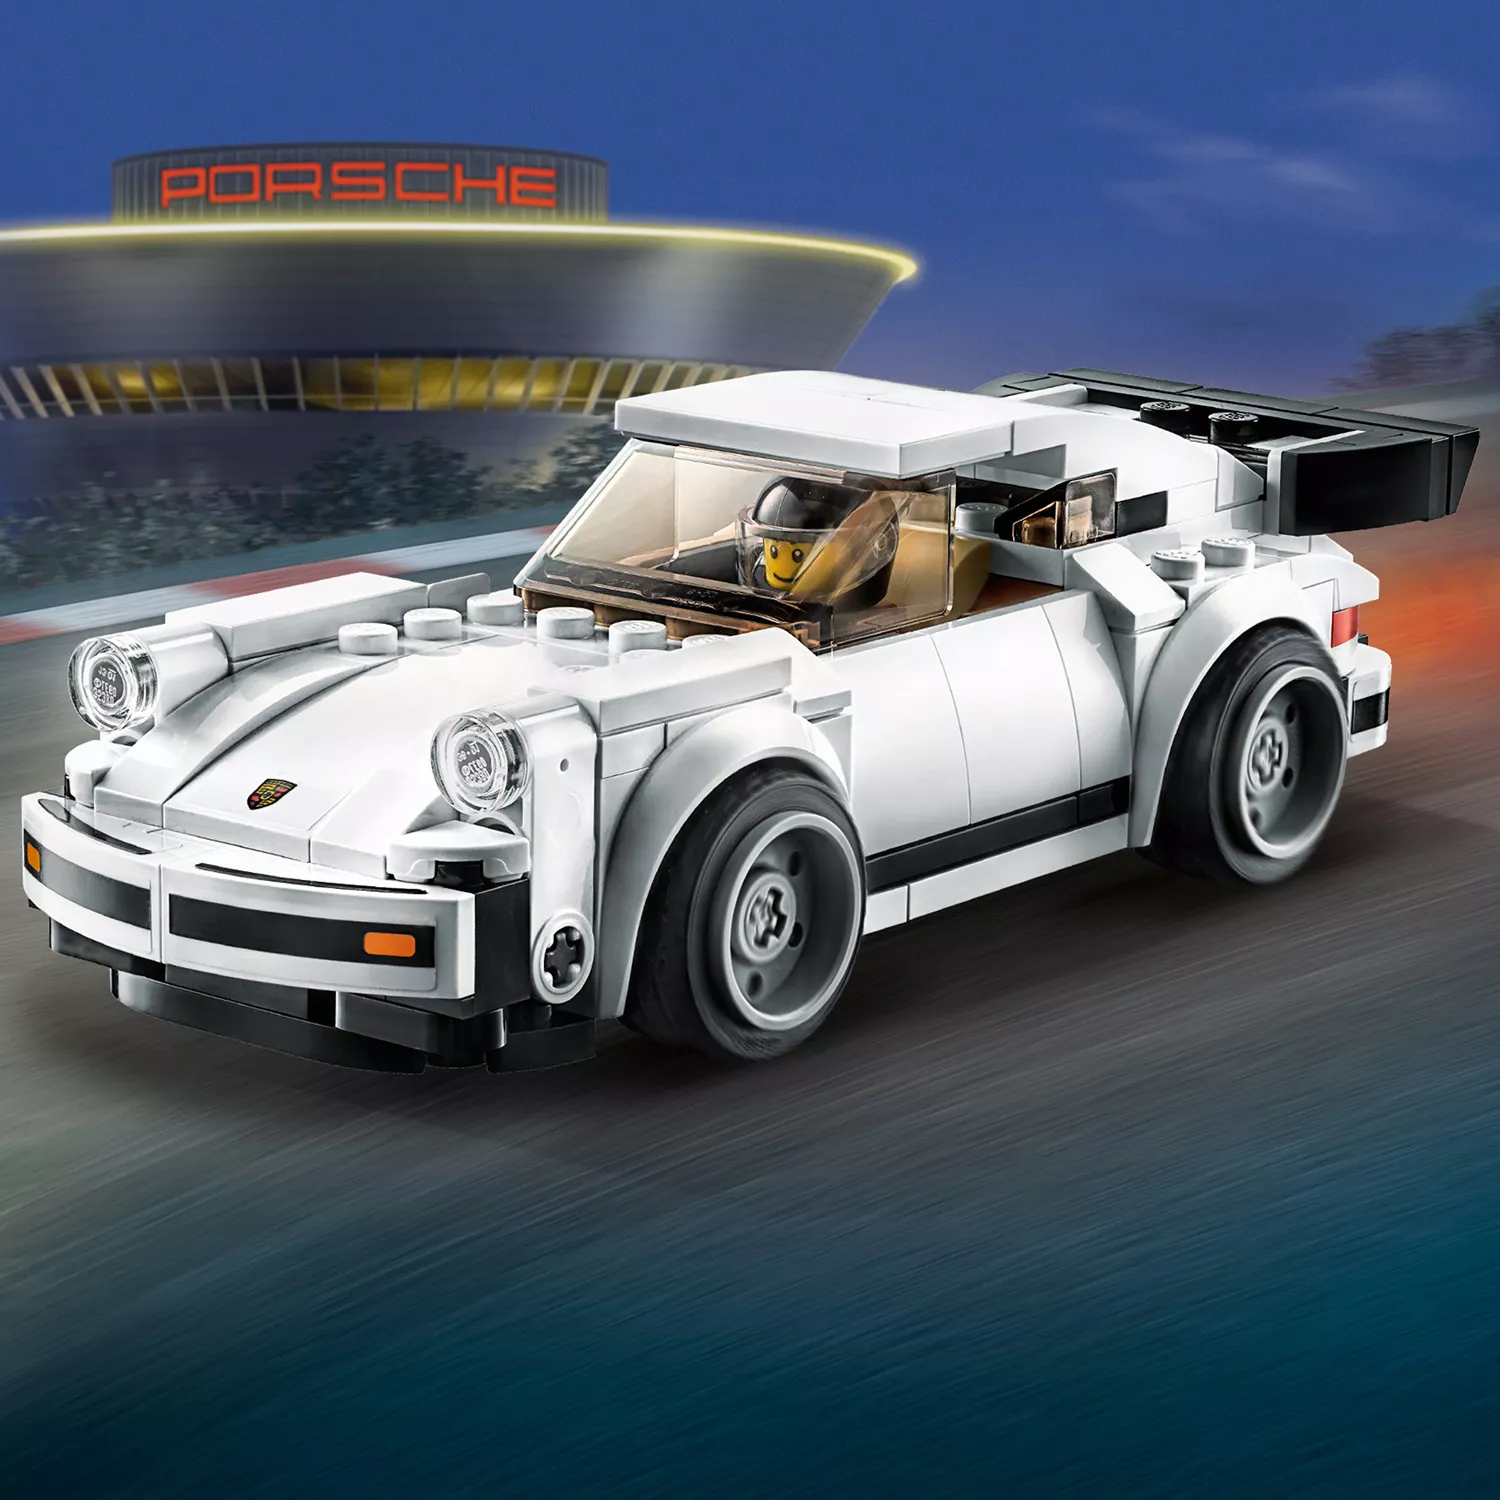 LEGO Speed Champions 1974 Porsche 911 Turbo 3.0